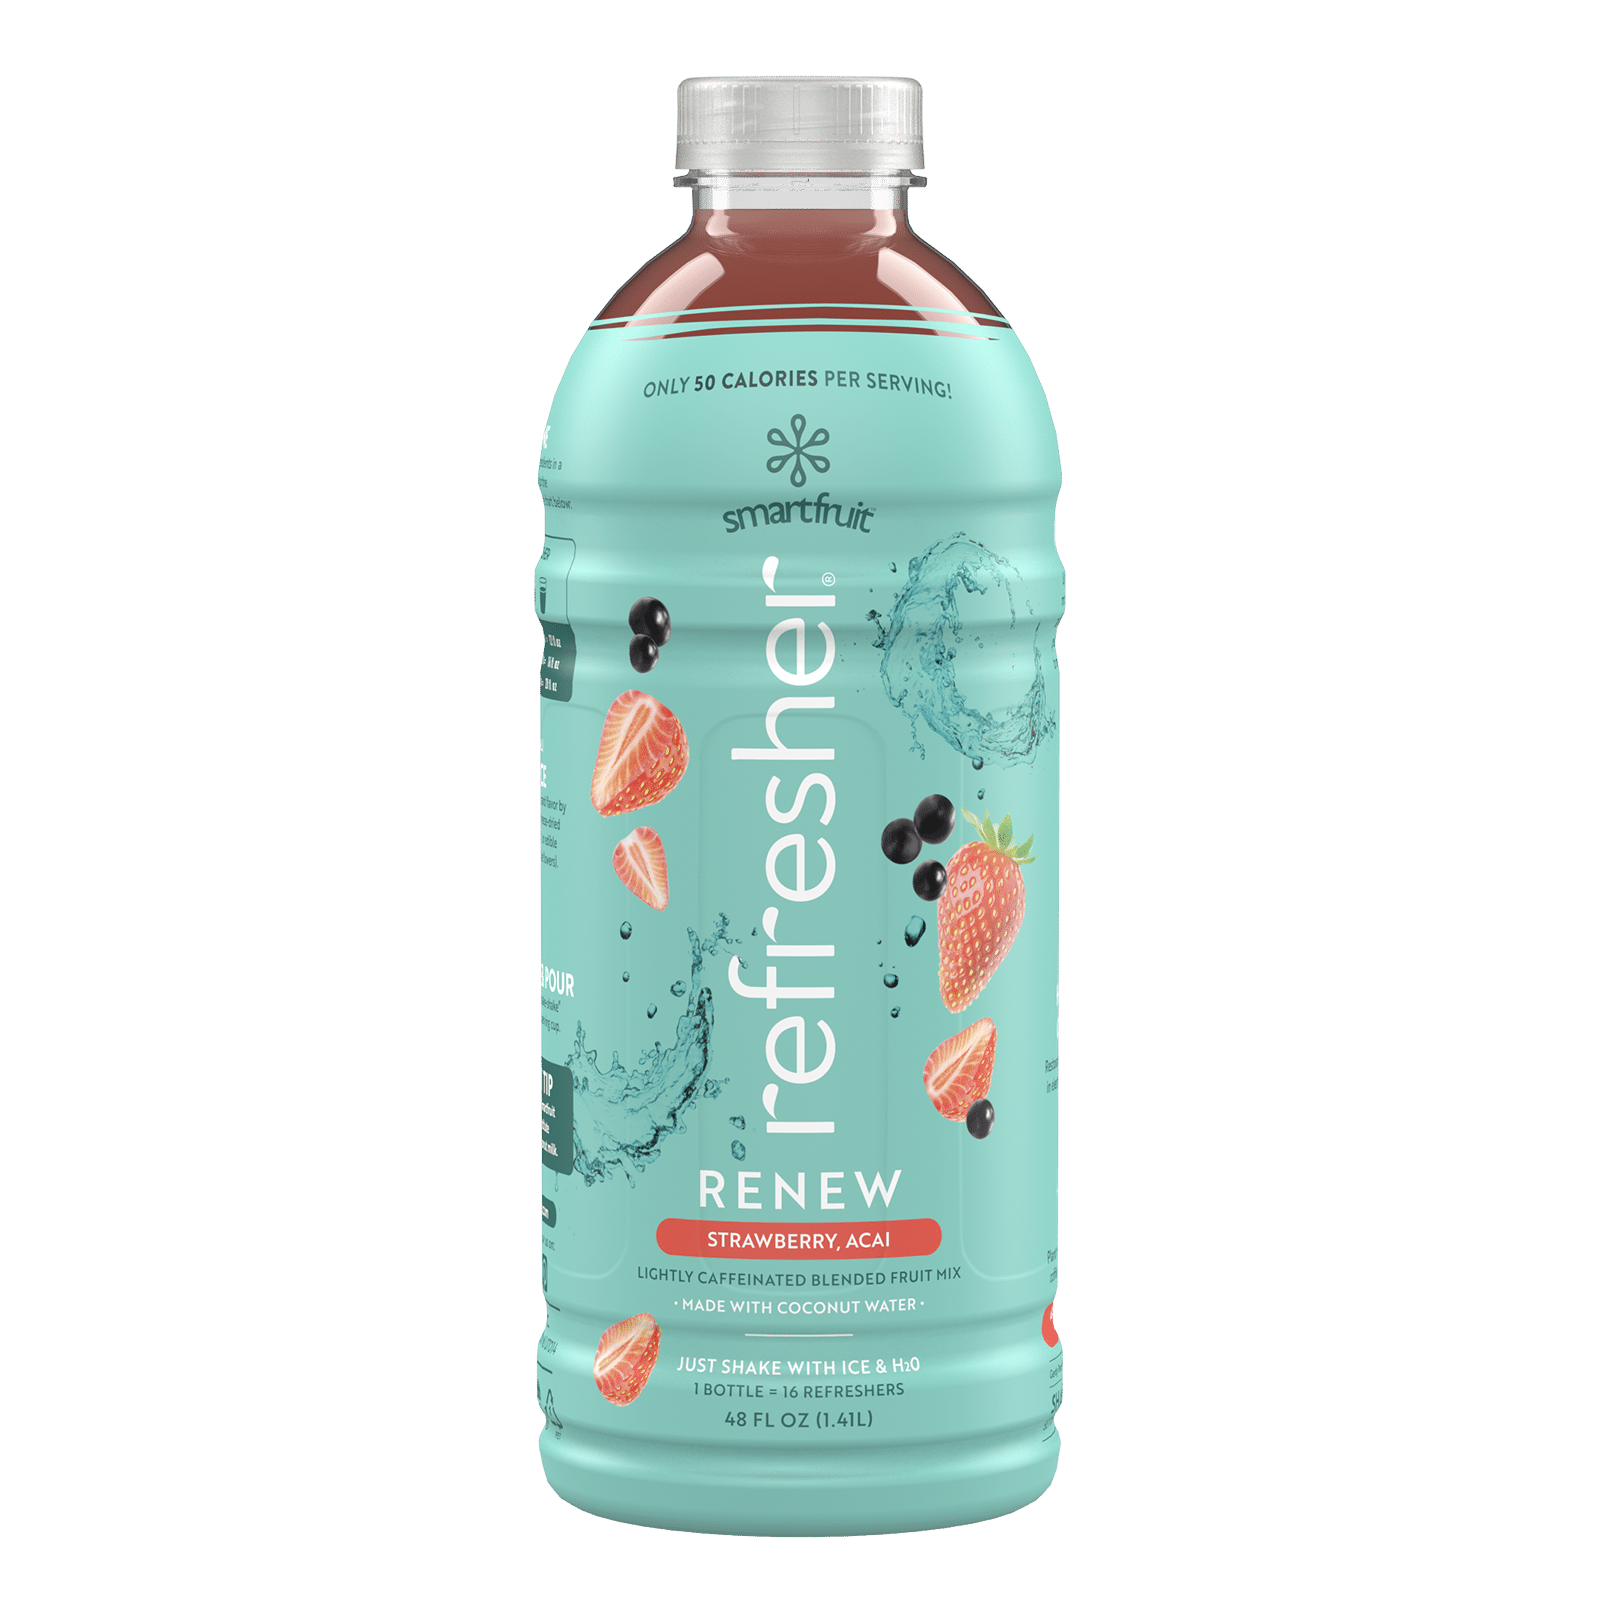 Smartfruit Renew Refresher bottle